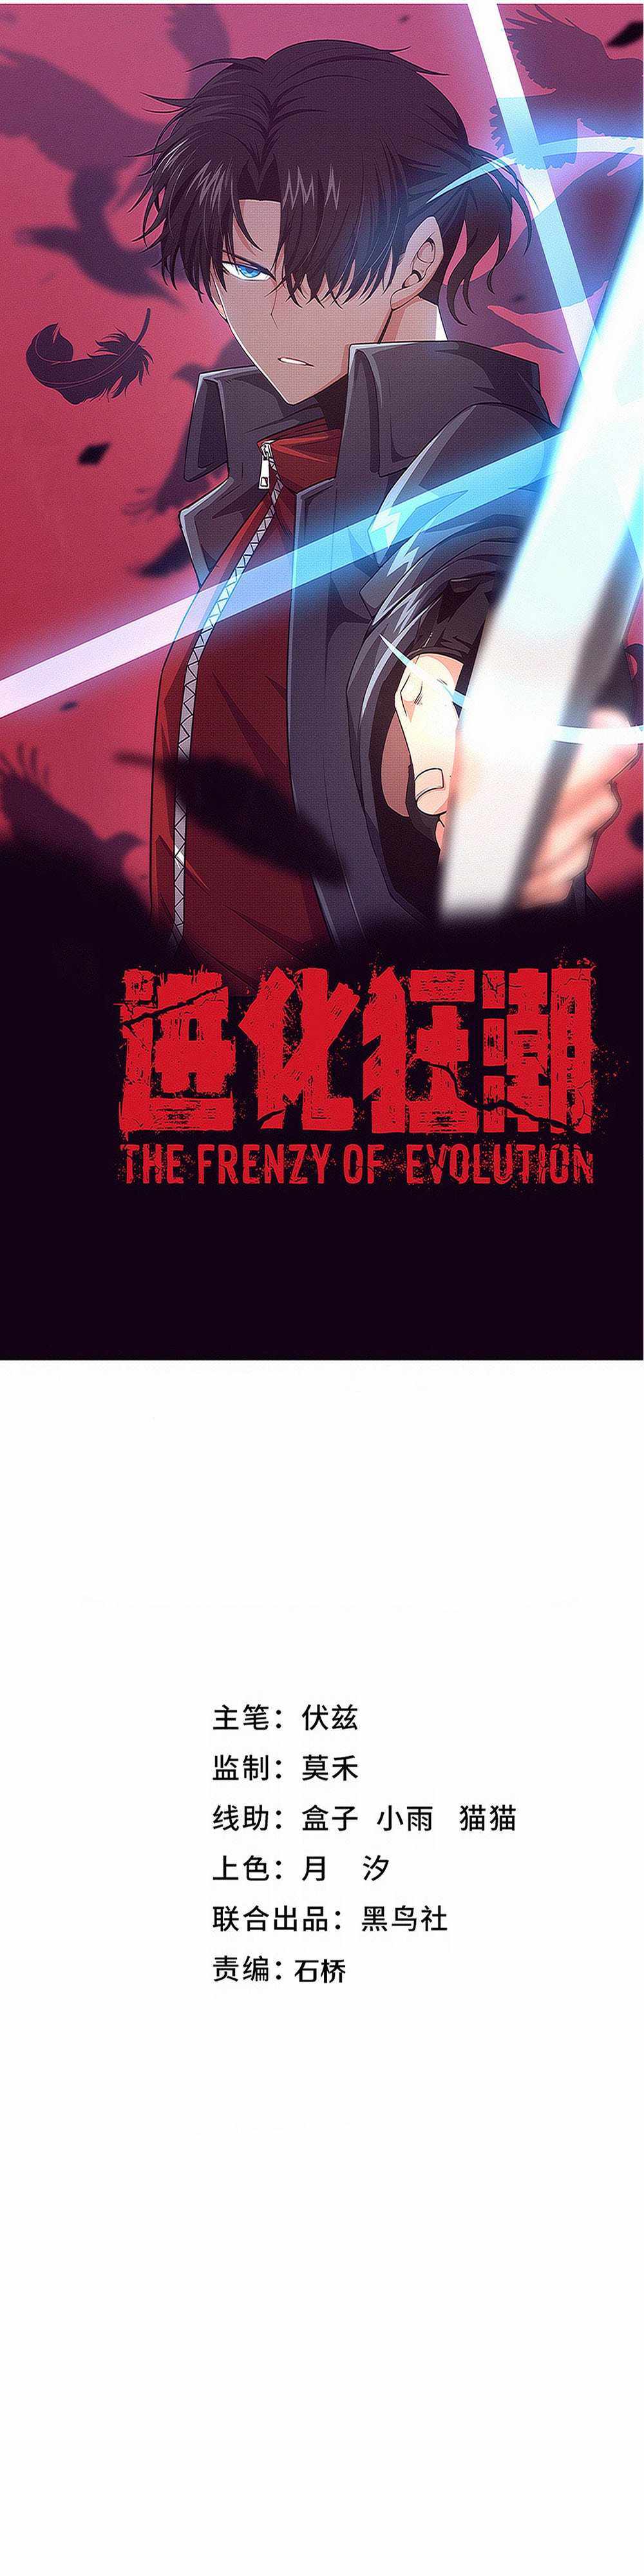 Evolution Frenzy - 168 page 4-df889ead